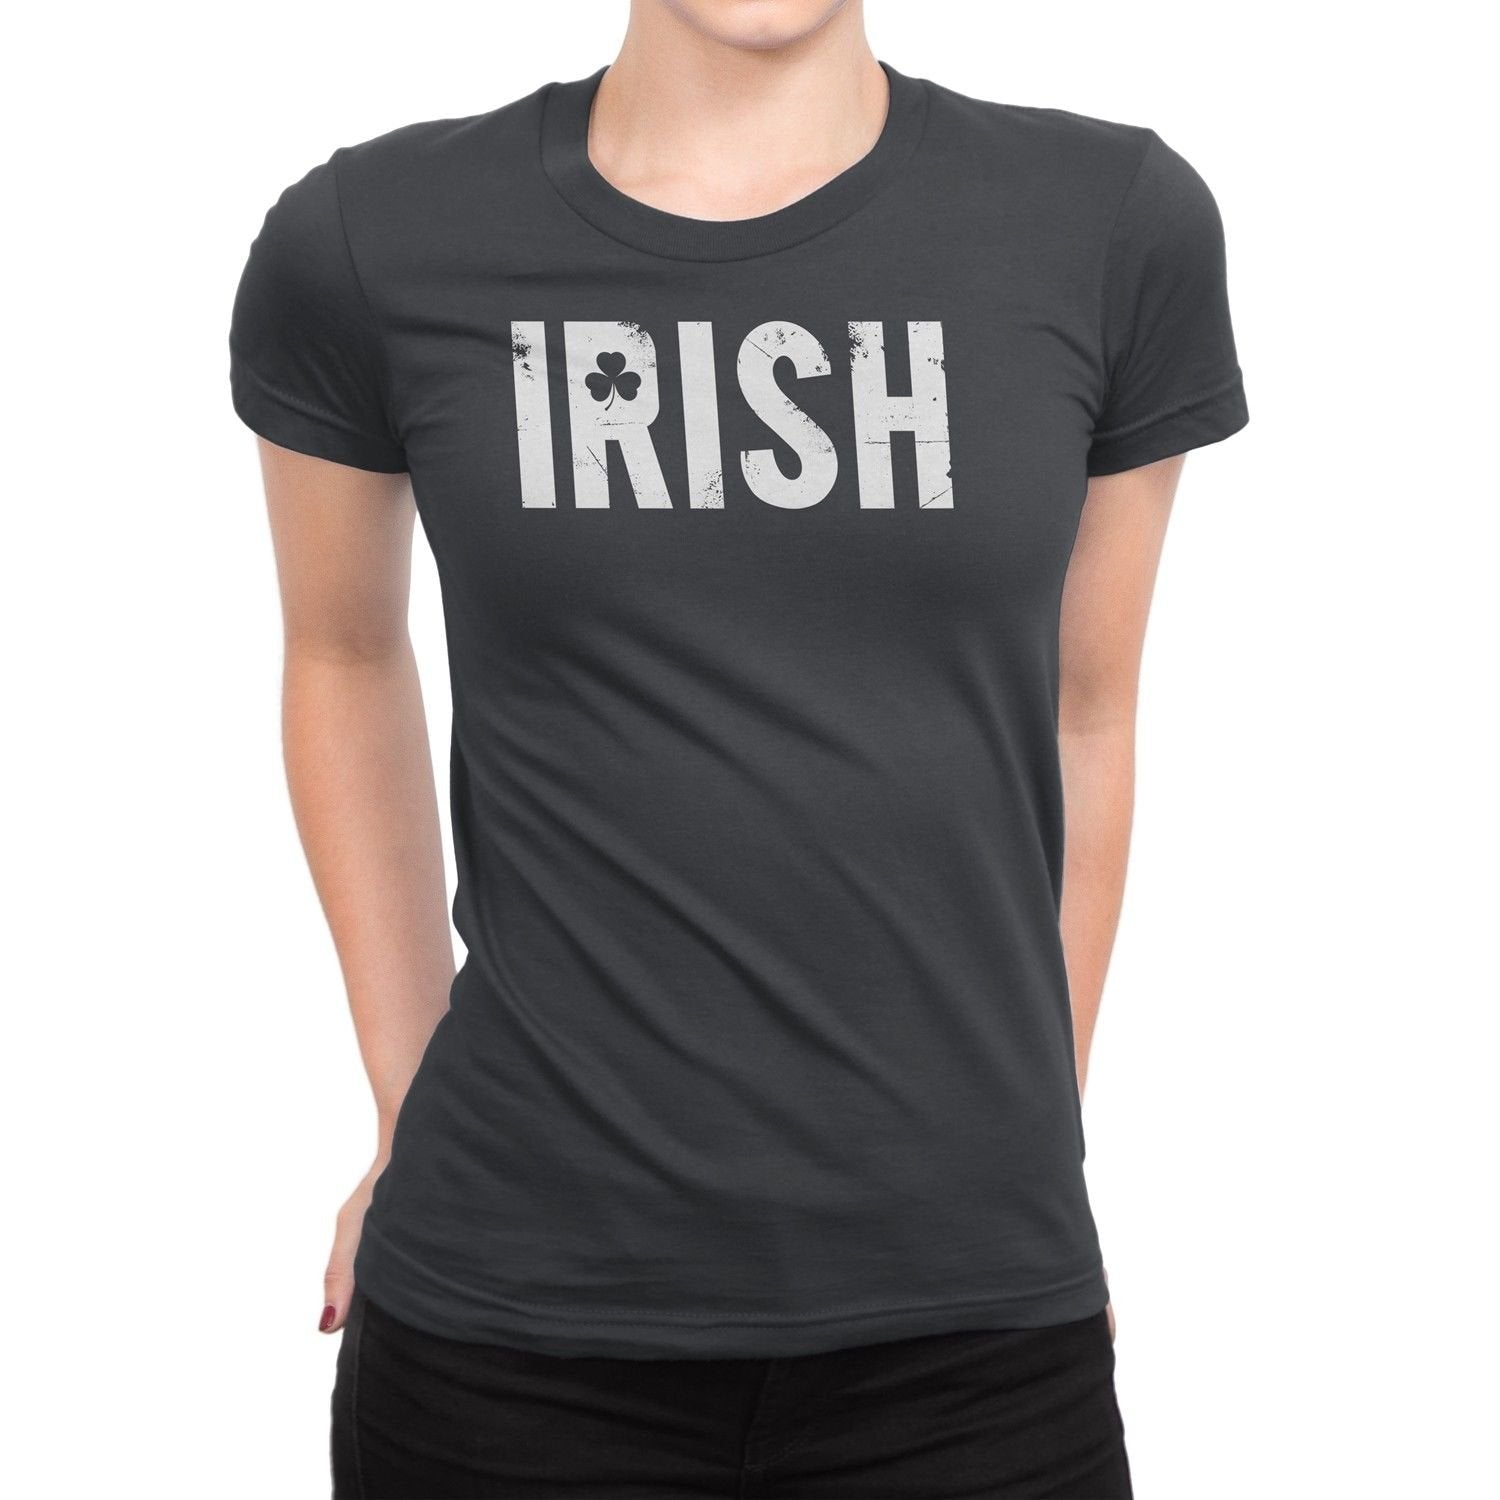 Irish Shamrock Clover Tee Ladies T-Shirt Womens Vintage Girls Retro